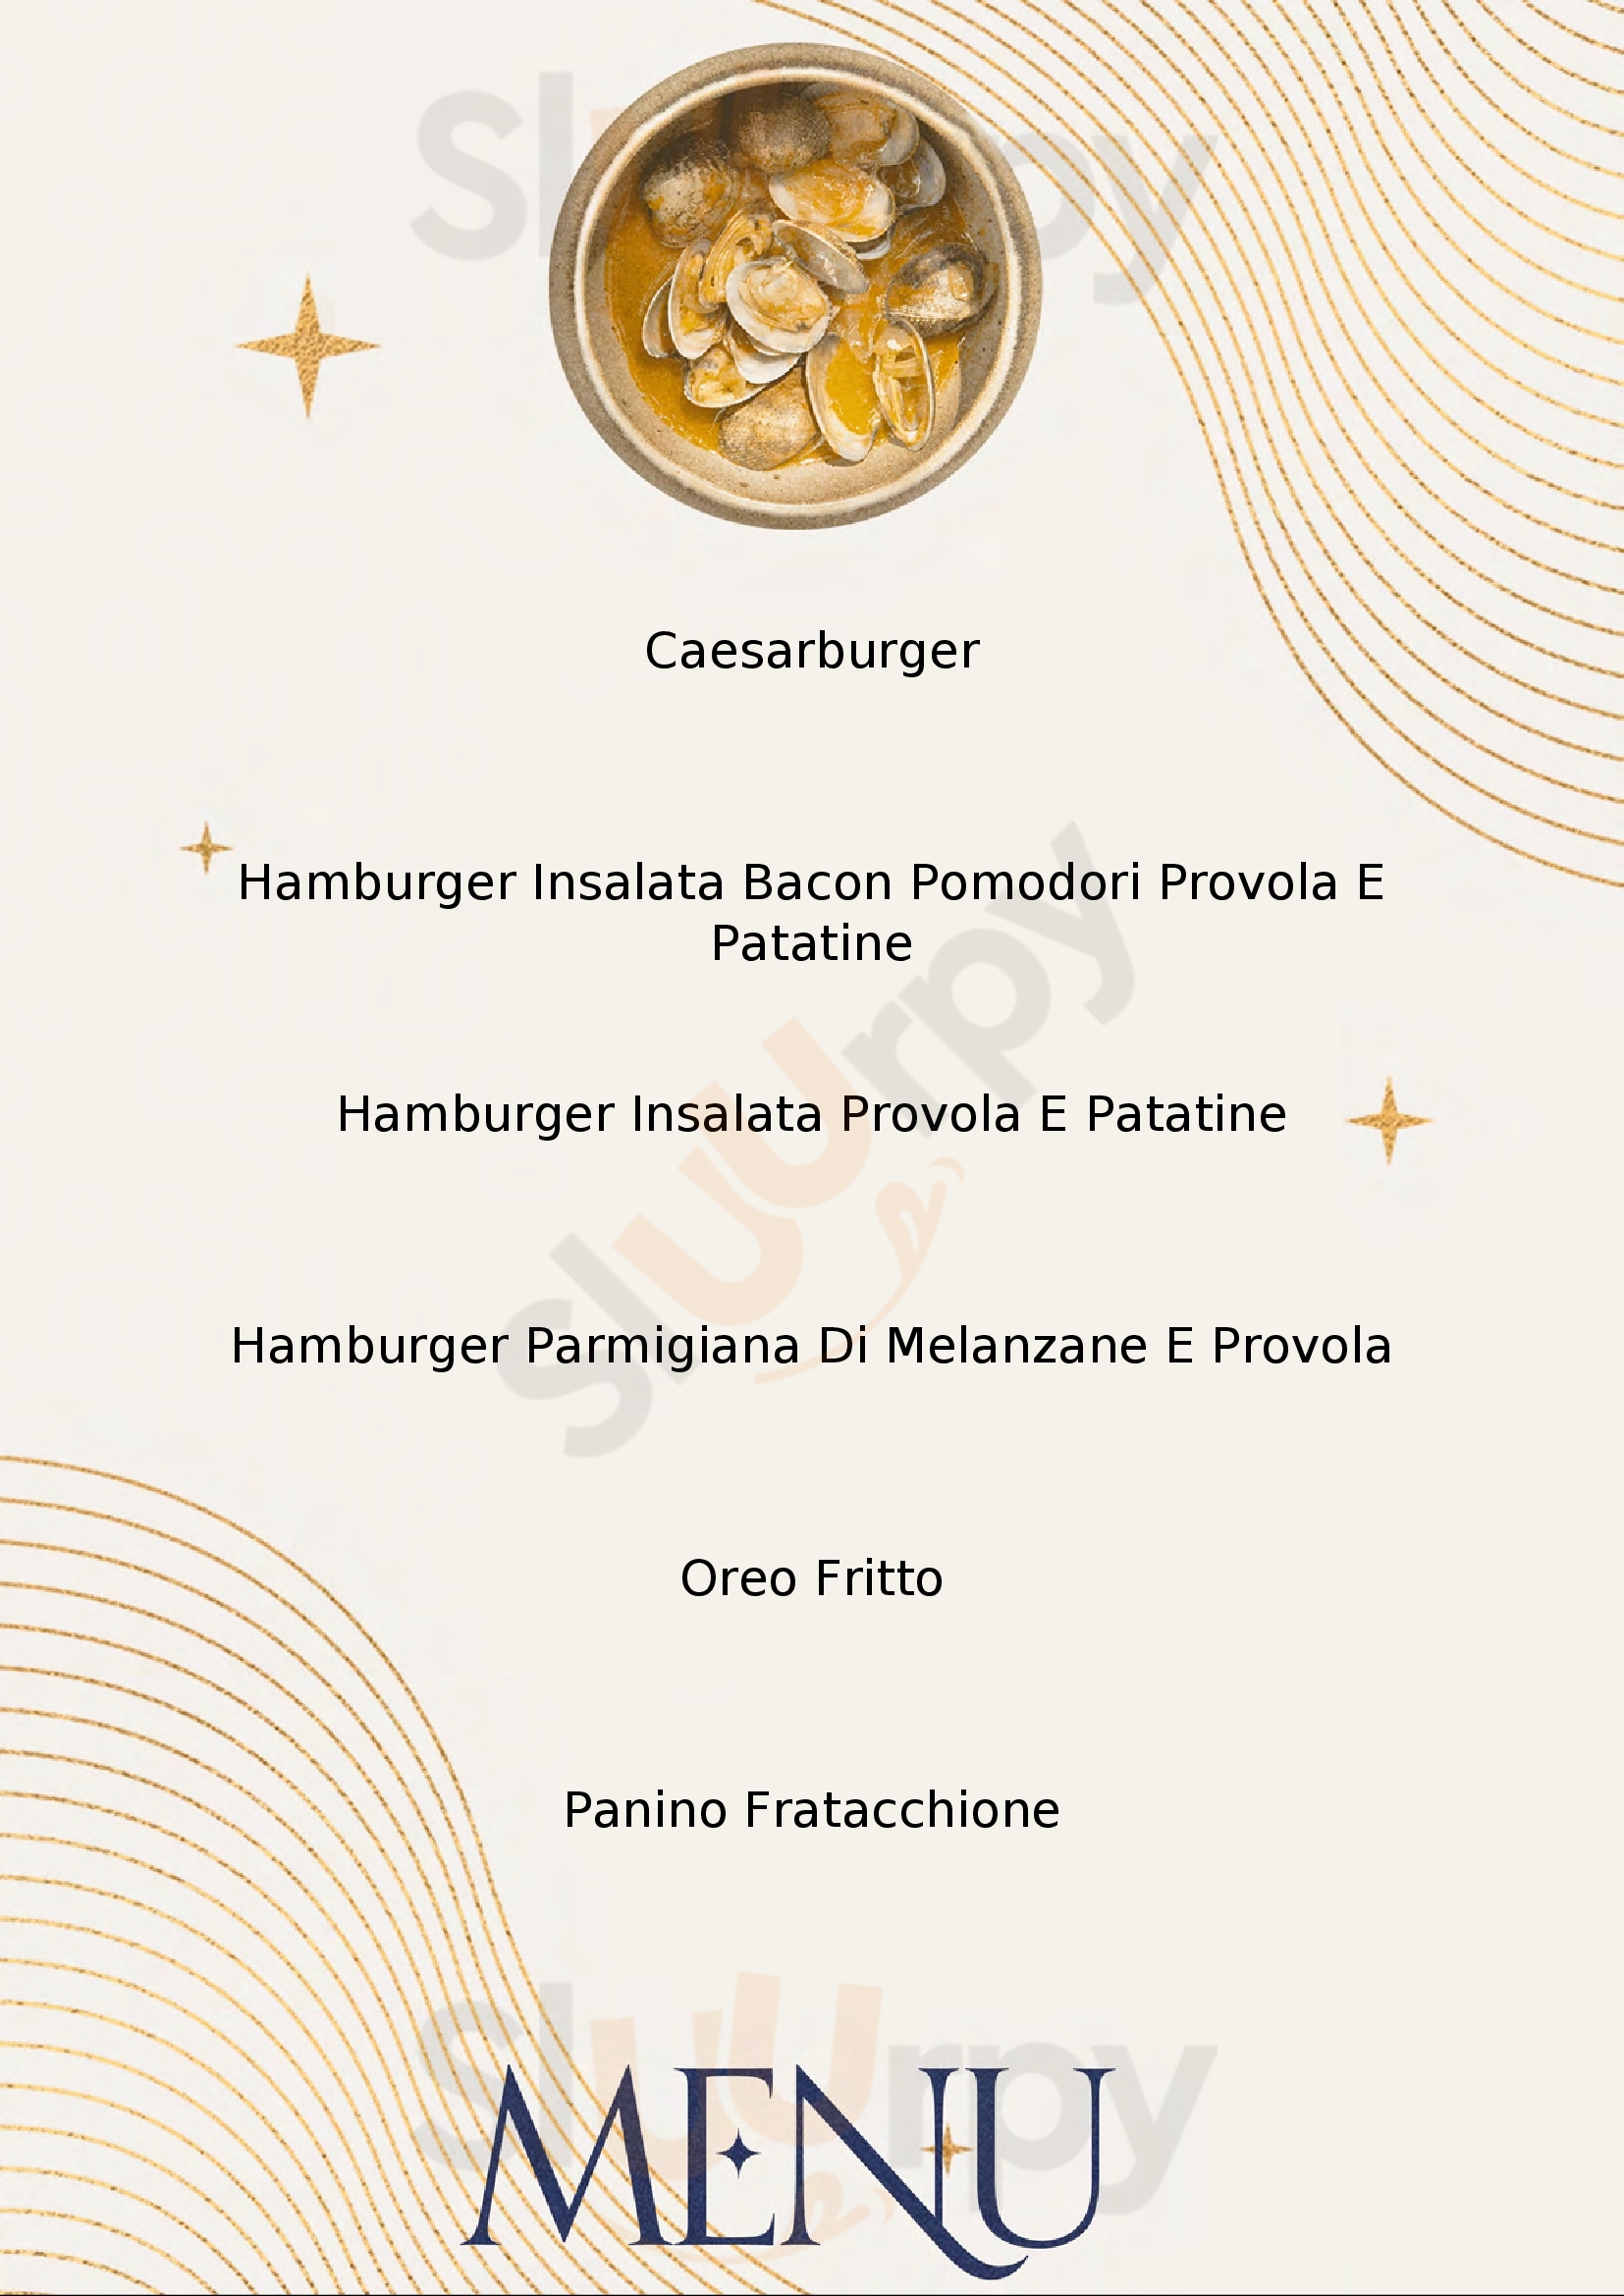 BOH - Best Of Hamburger Sant'Anastasia menù 1 pagina